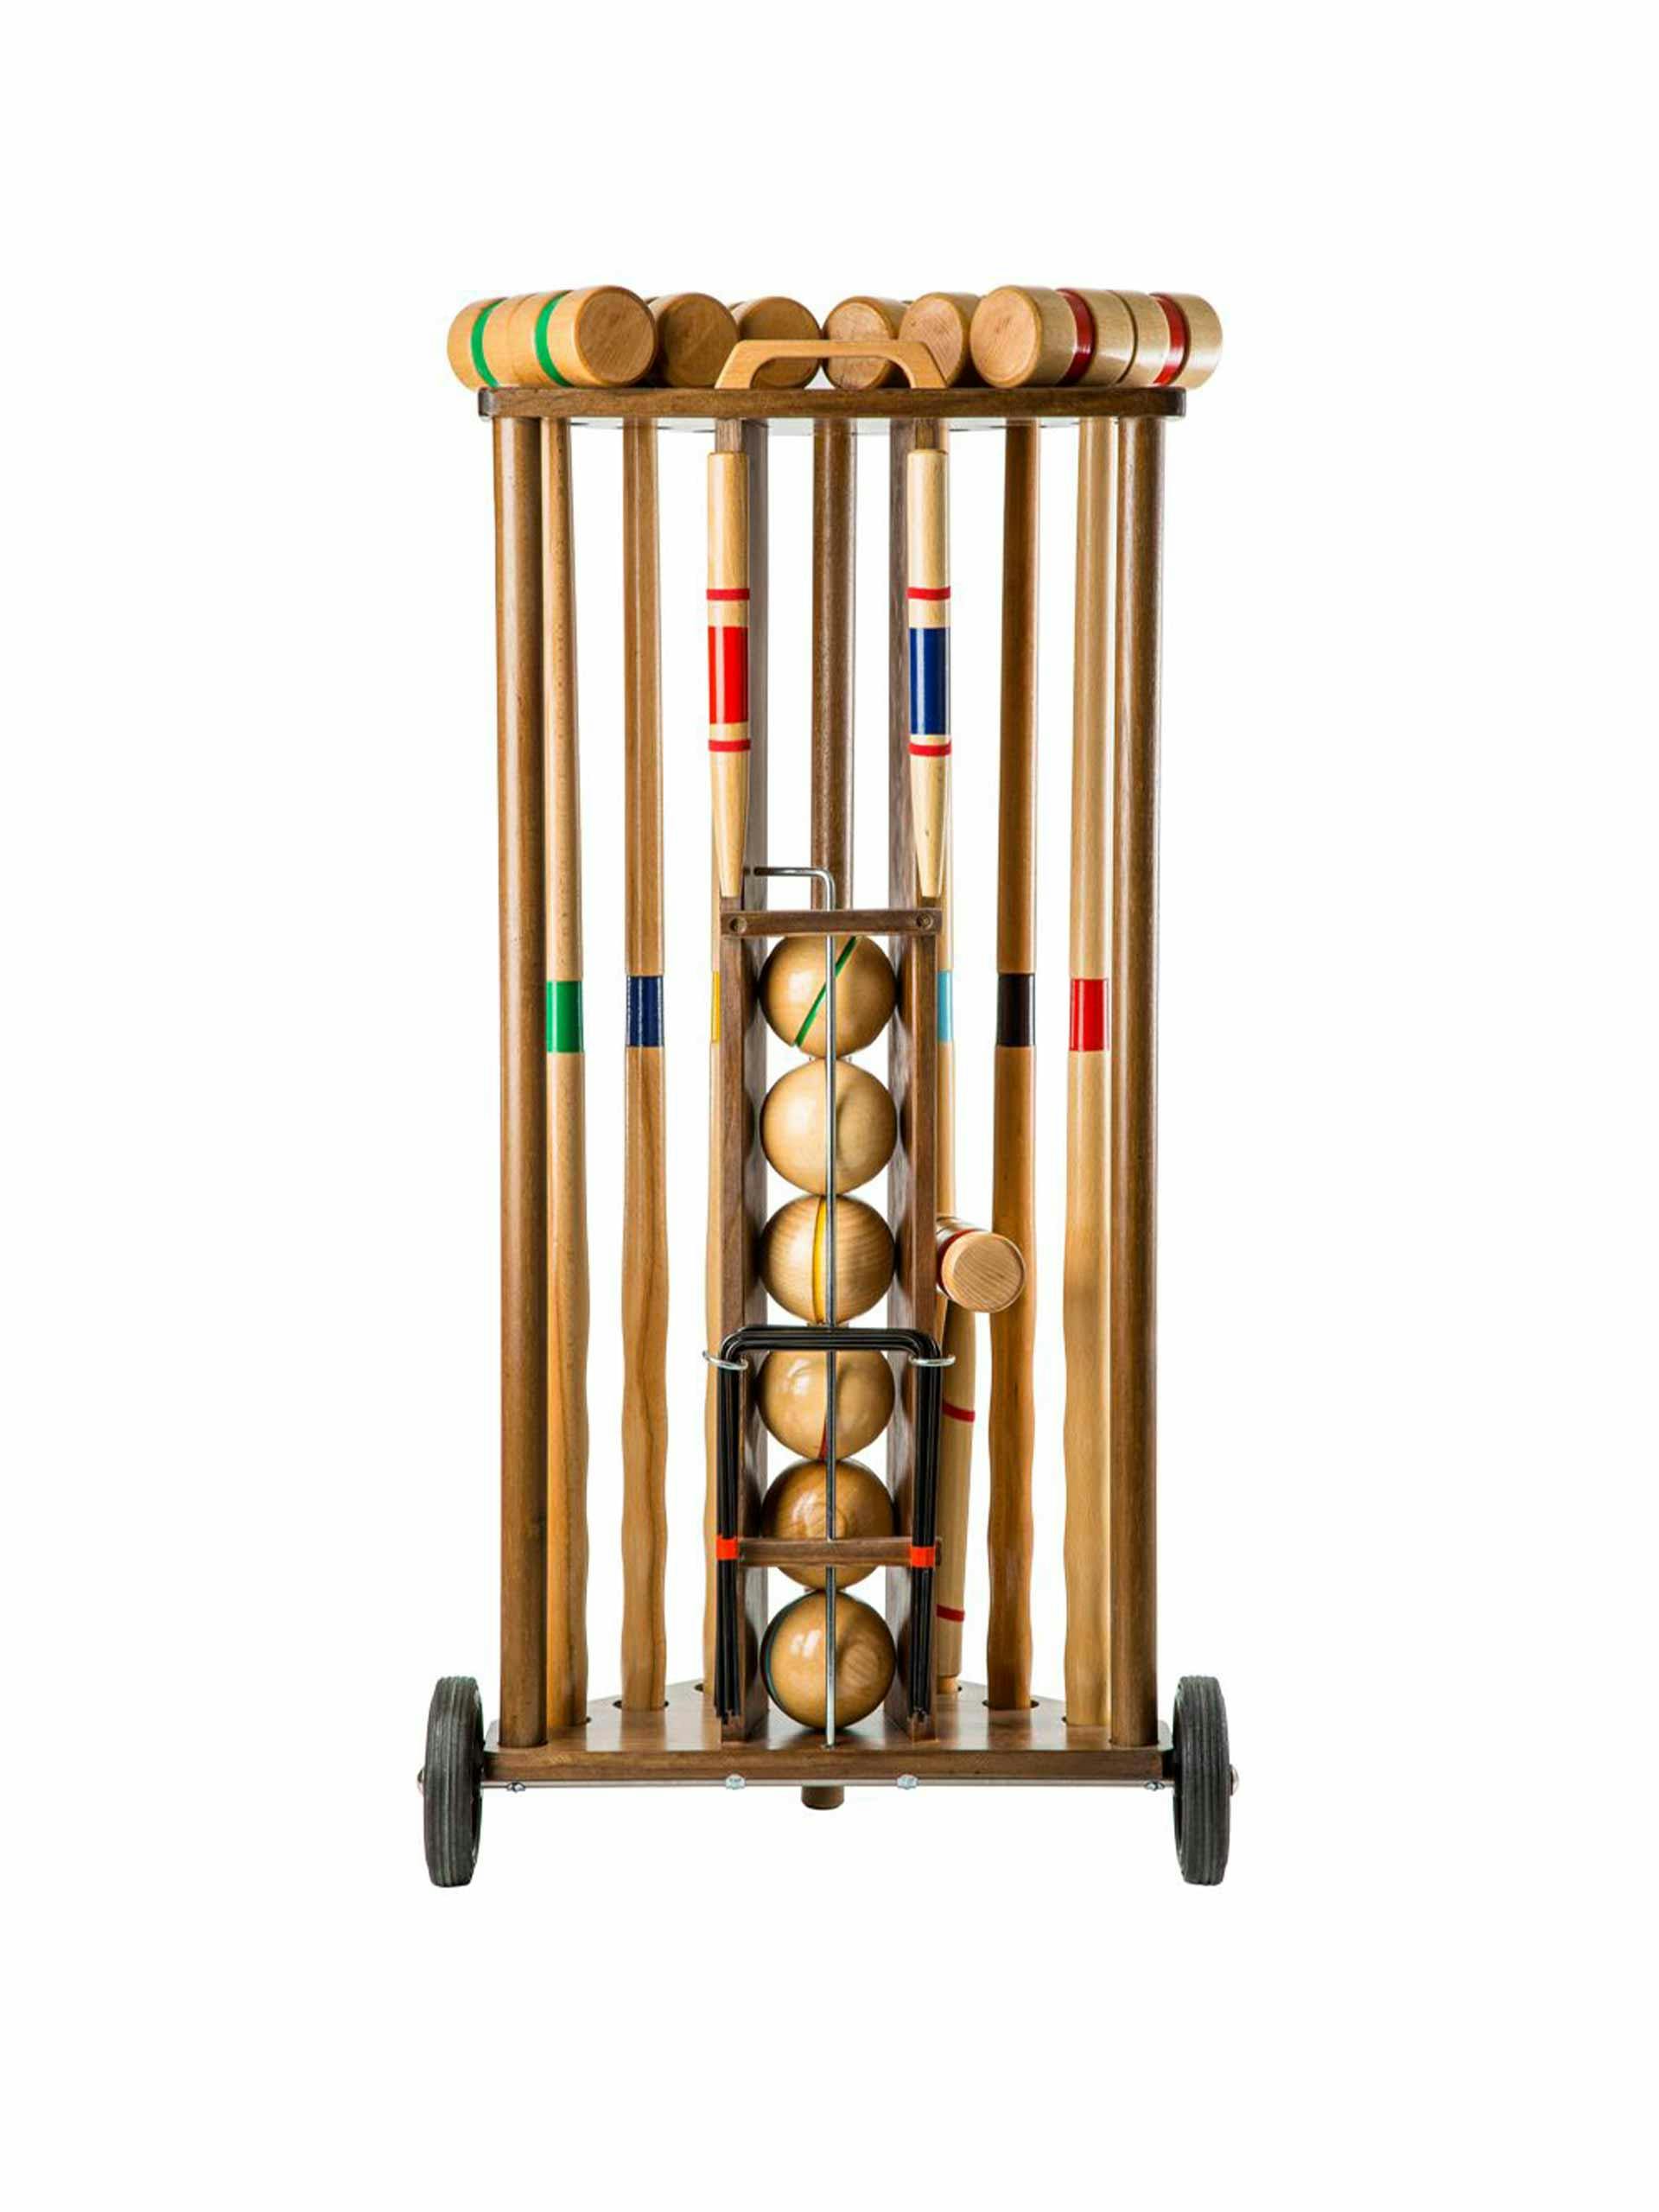 Wooden croquet set